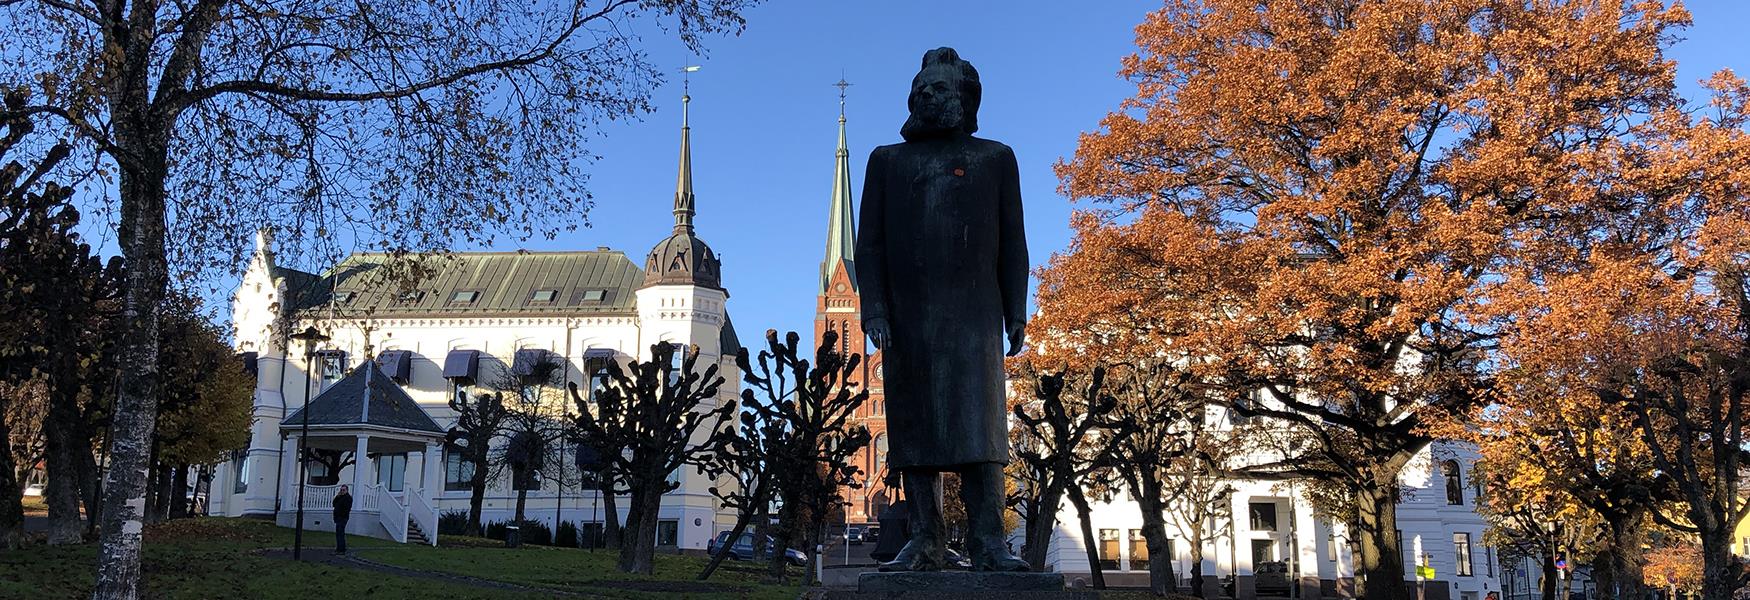 Henrik Ibsen statue in the Ibsenpark in Skien